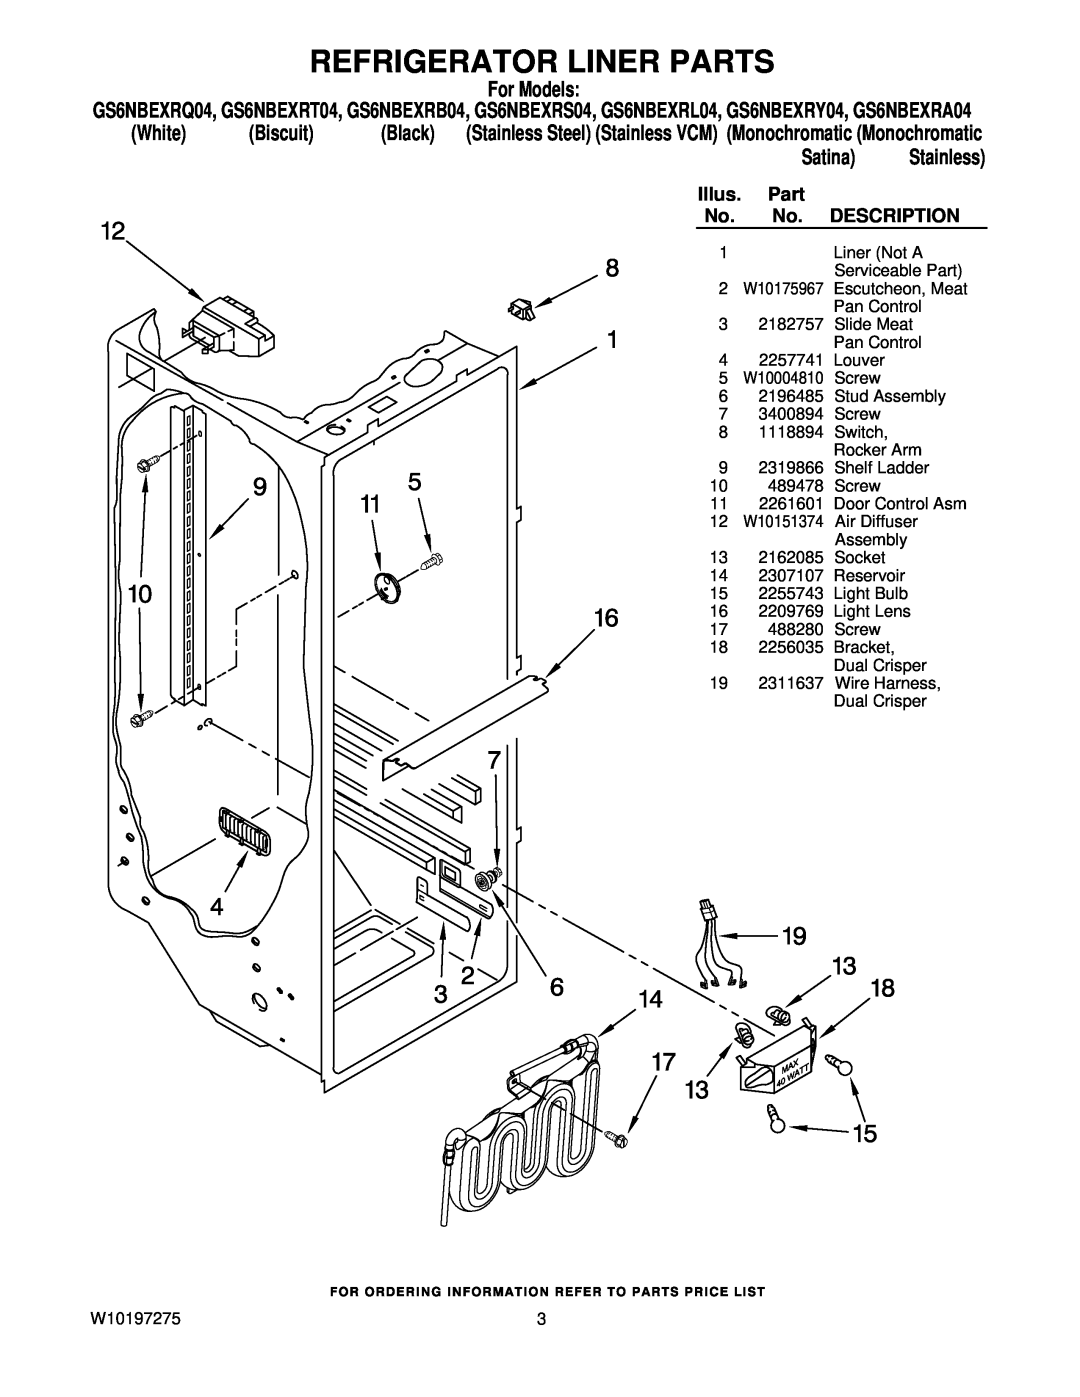 Whirlpool W10197275 manual Refrigerator Liner Parts, Illus, Description, For Models, White, Biscuit, Black, Satina 